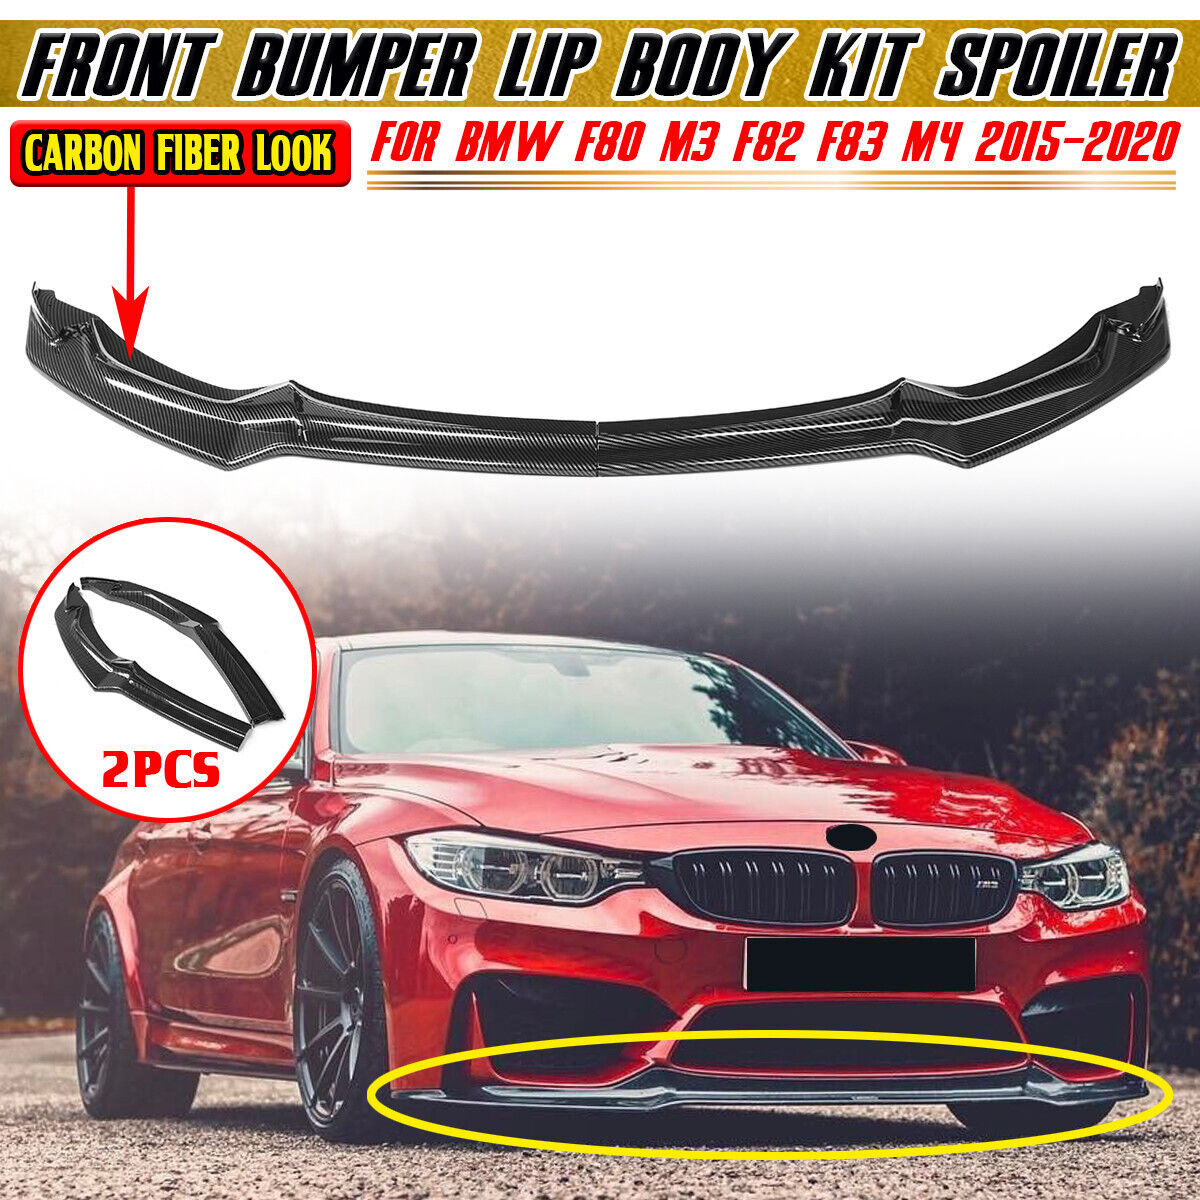 Carbon Fiber Style Front Bumper Lip Splitter For BMW F80 M3 F82 F83 M4 2015-2020